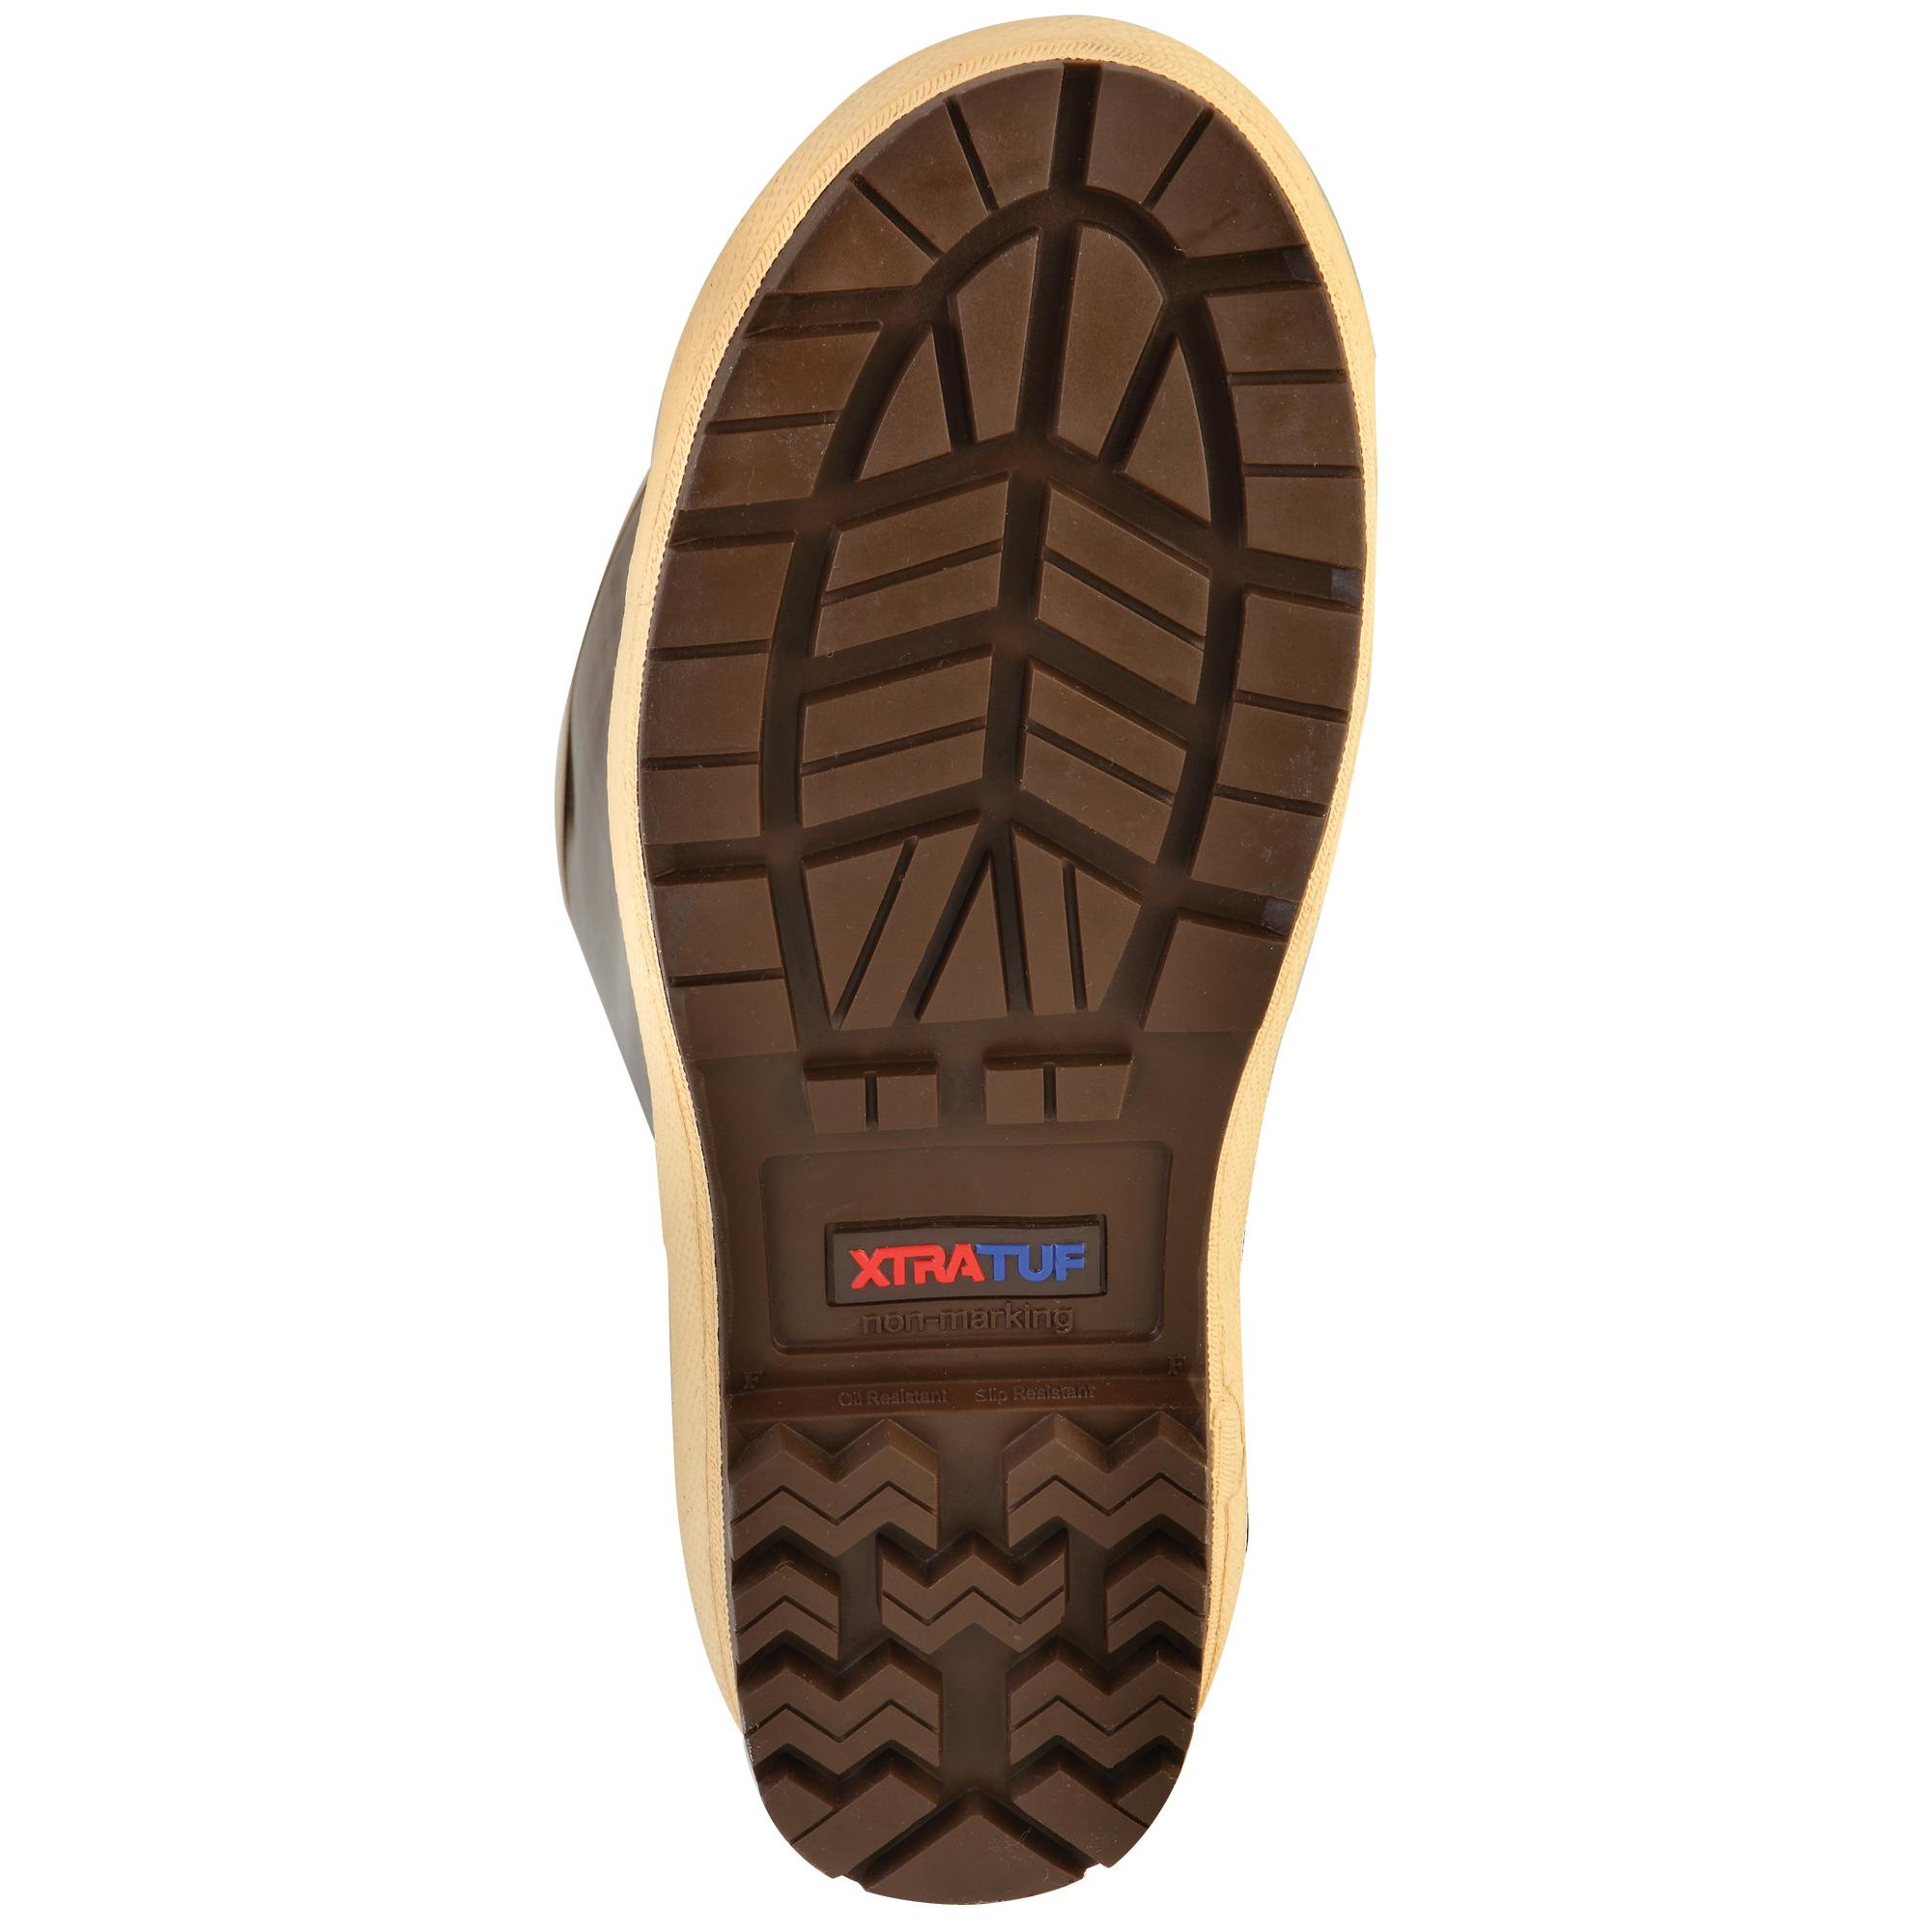 XTRATUF Deck Boot - 12 - Chocolate/Tan, Rain Boots